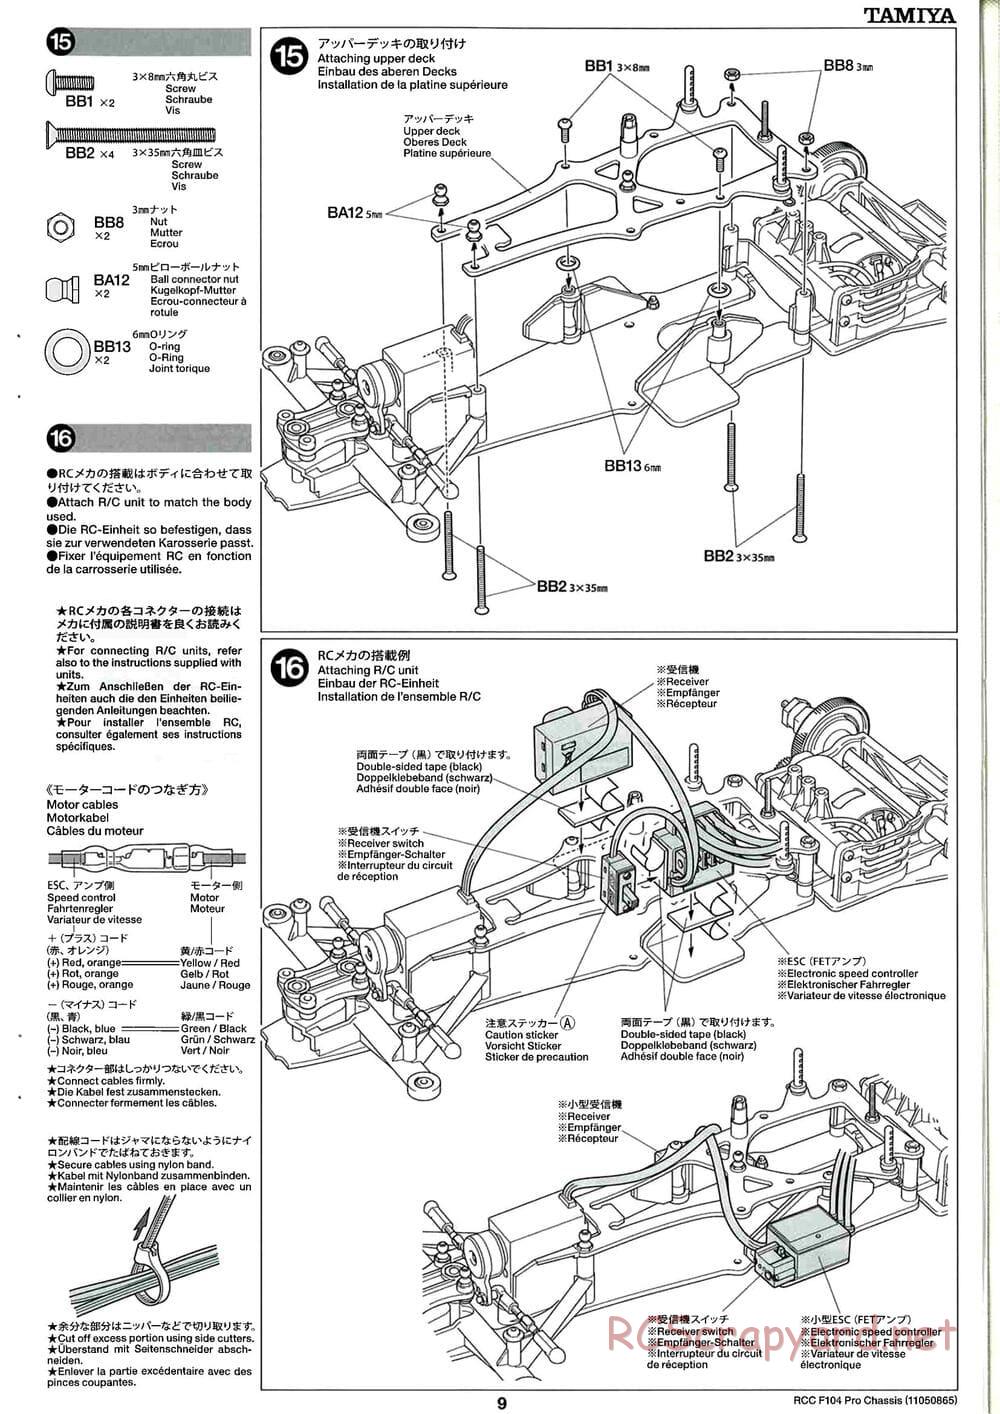 Tamiya - F104 Pro Chassis - Manual - Page 9